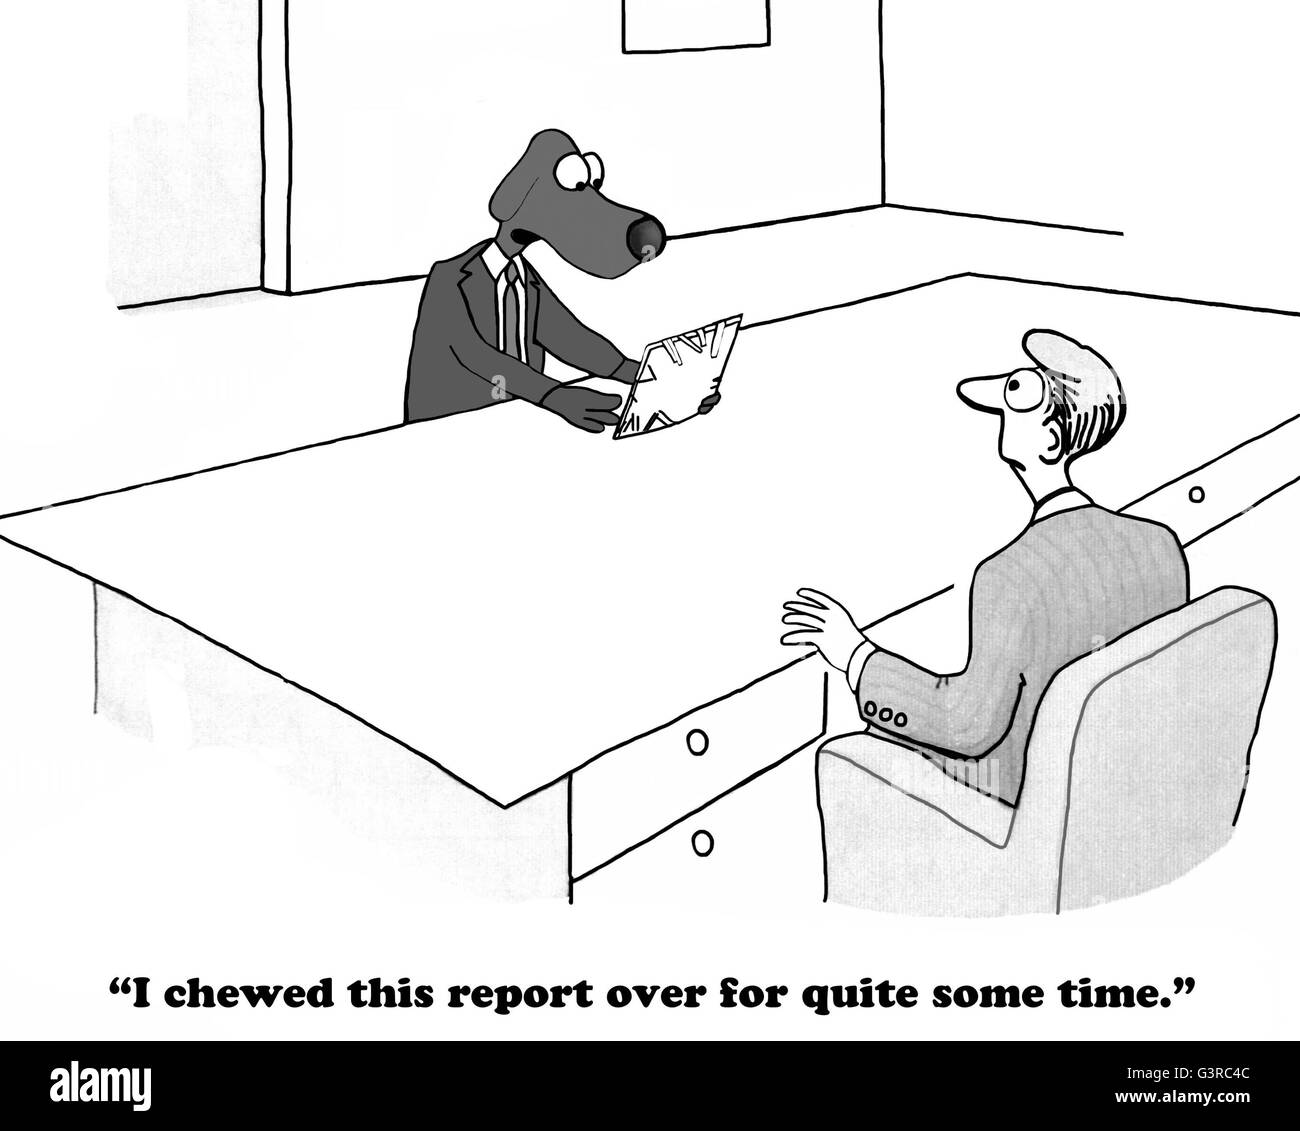 Business cartoon about analysis paralysis Stock Photo - Alamy